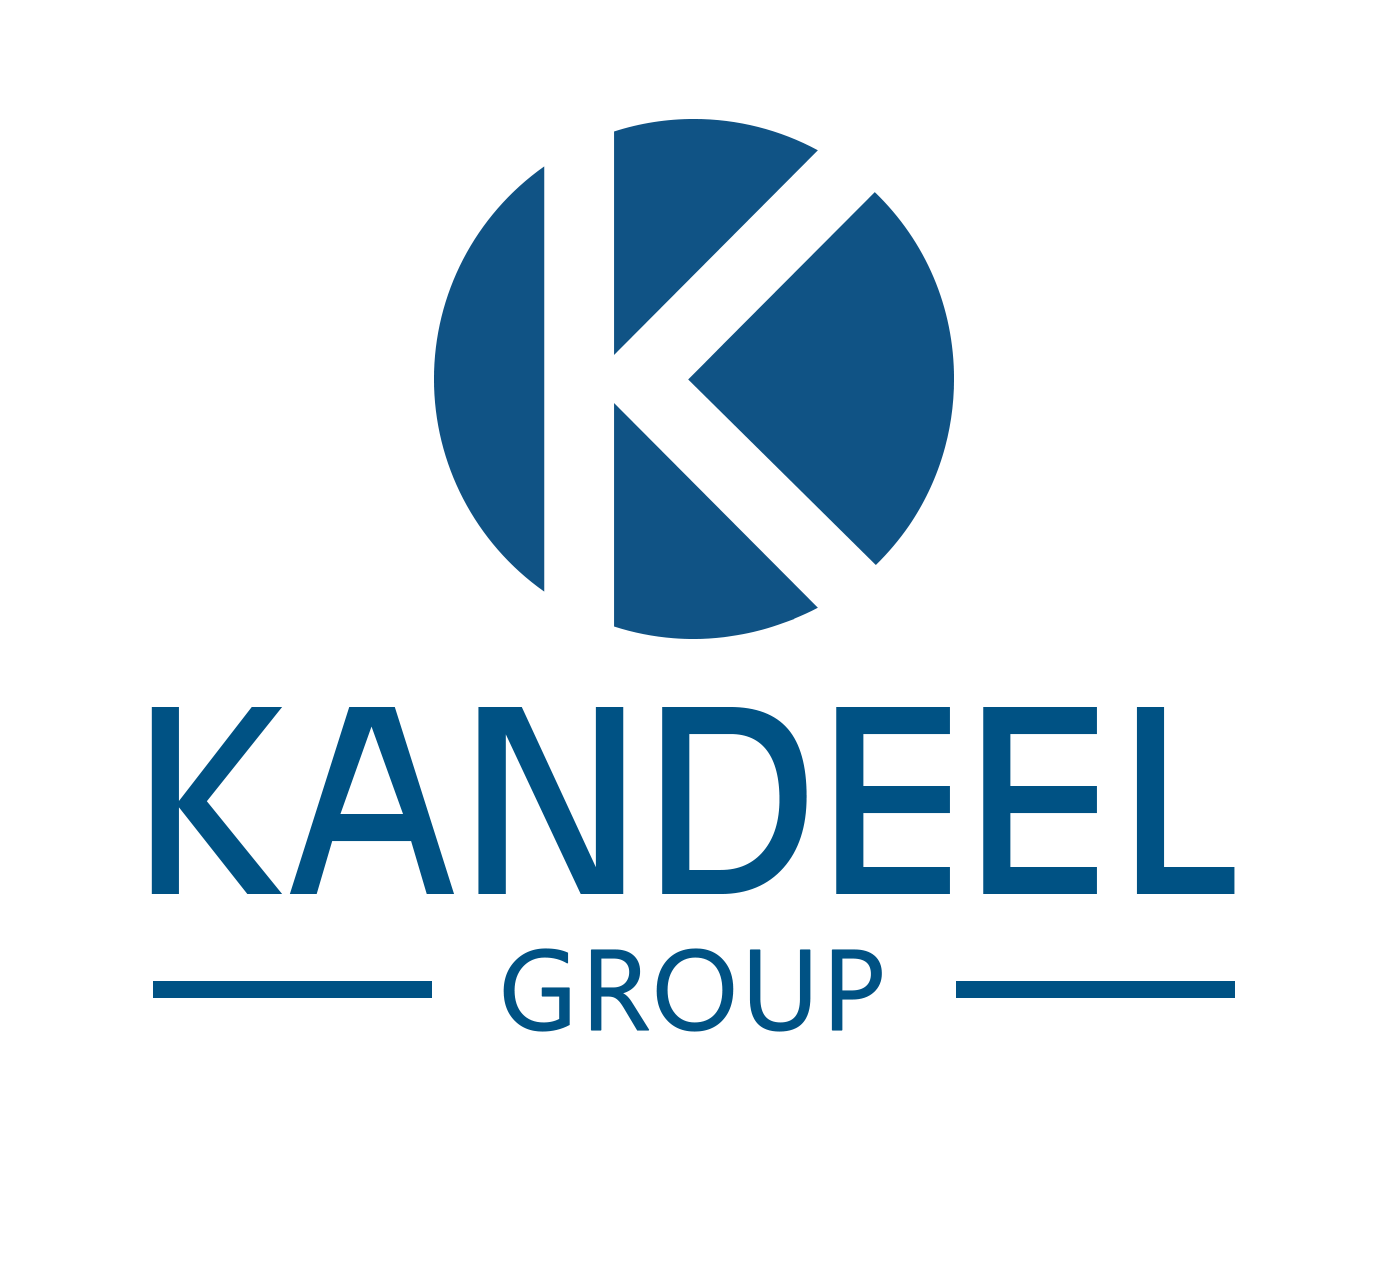 Kandeel Group